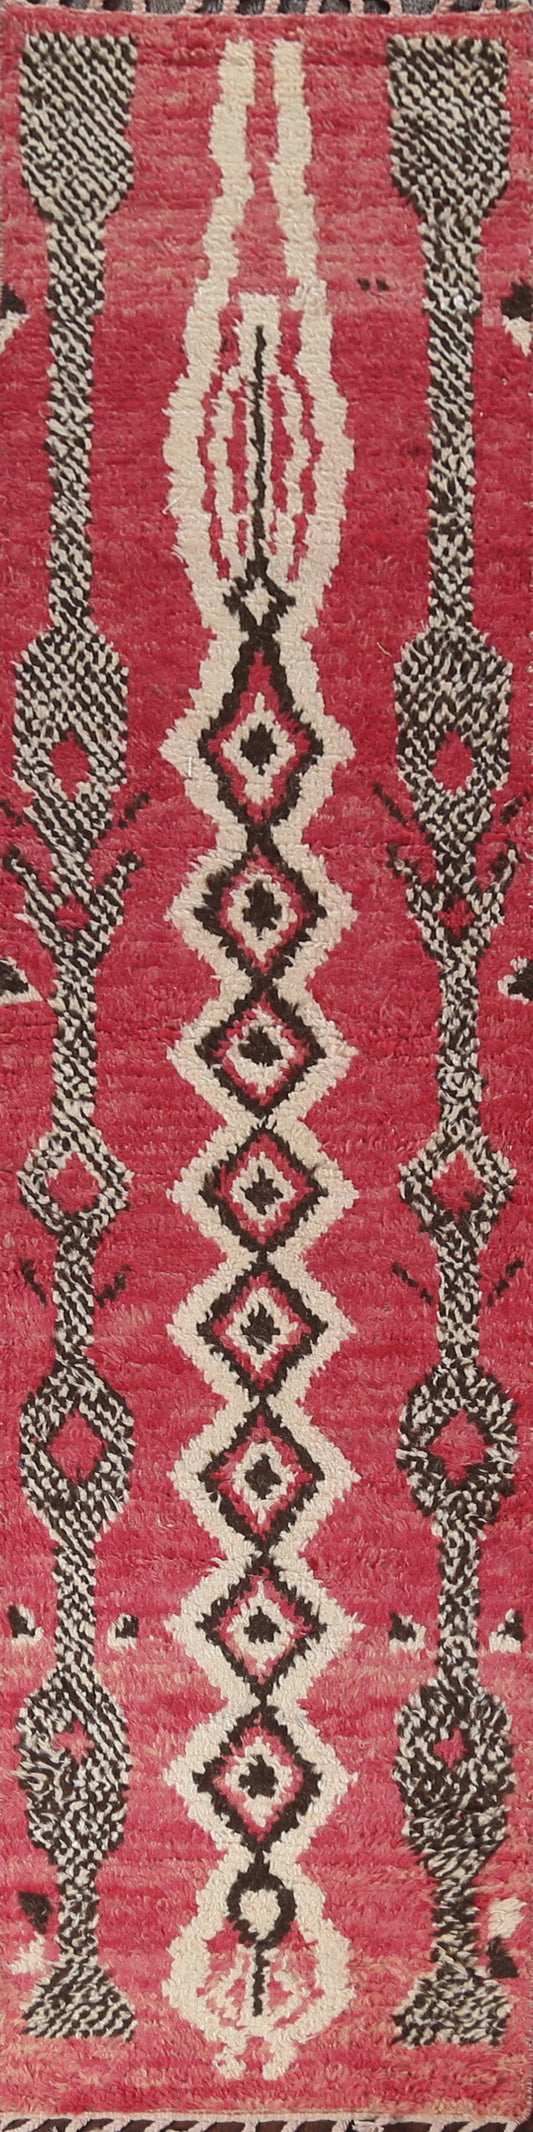 Tribal Moroccan Handmade Runner Rug 2x11